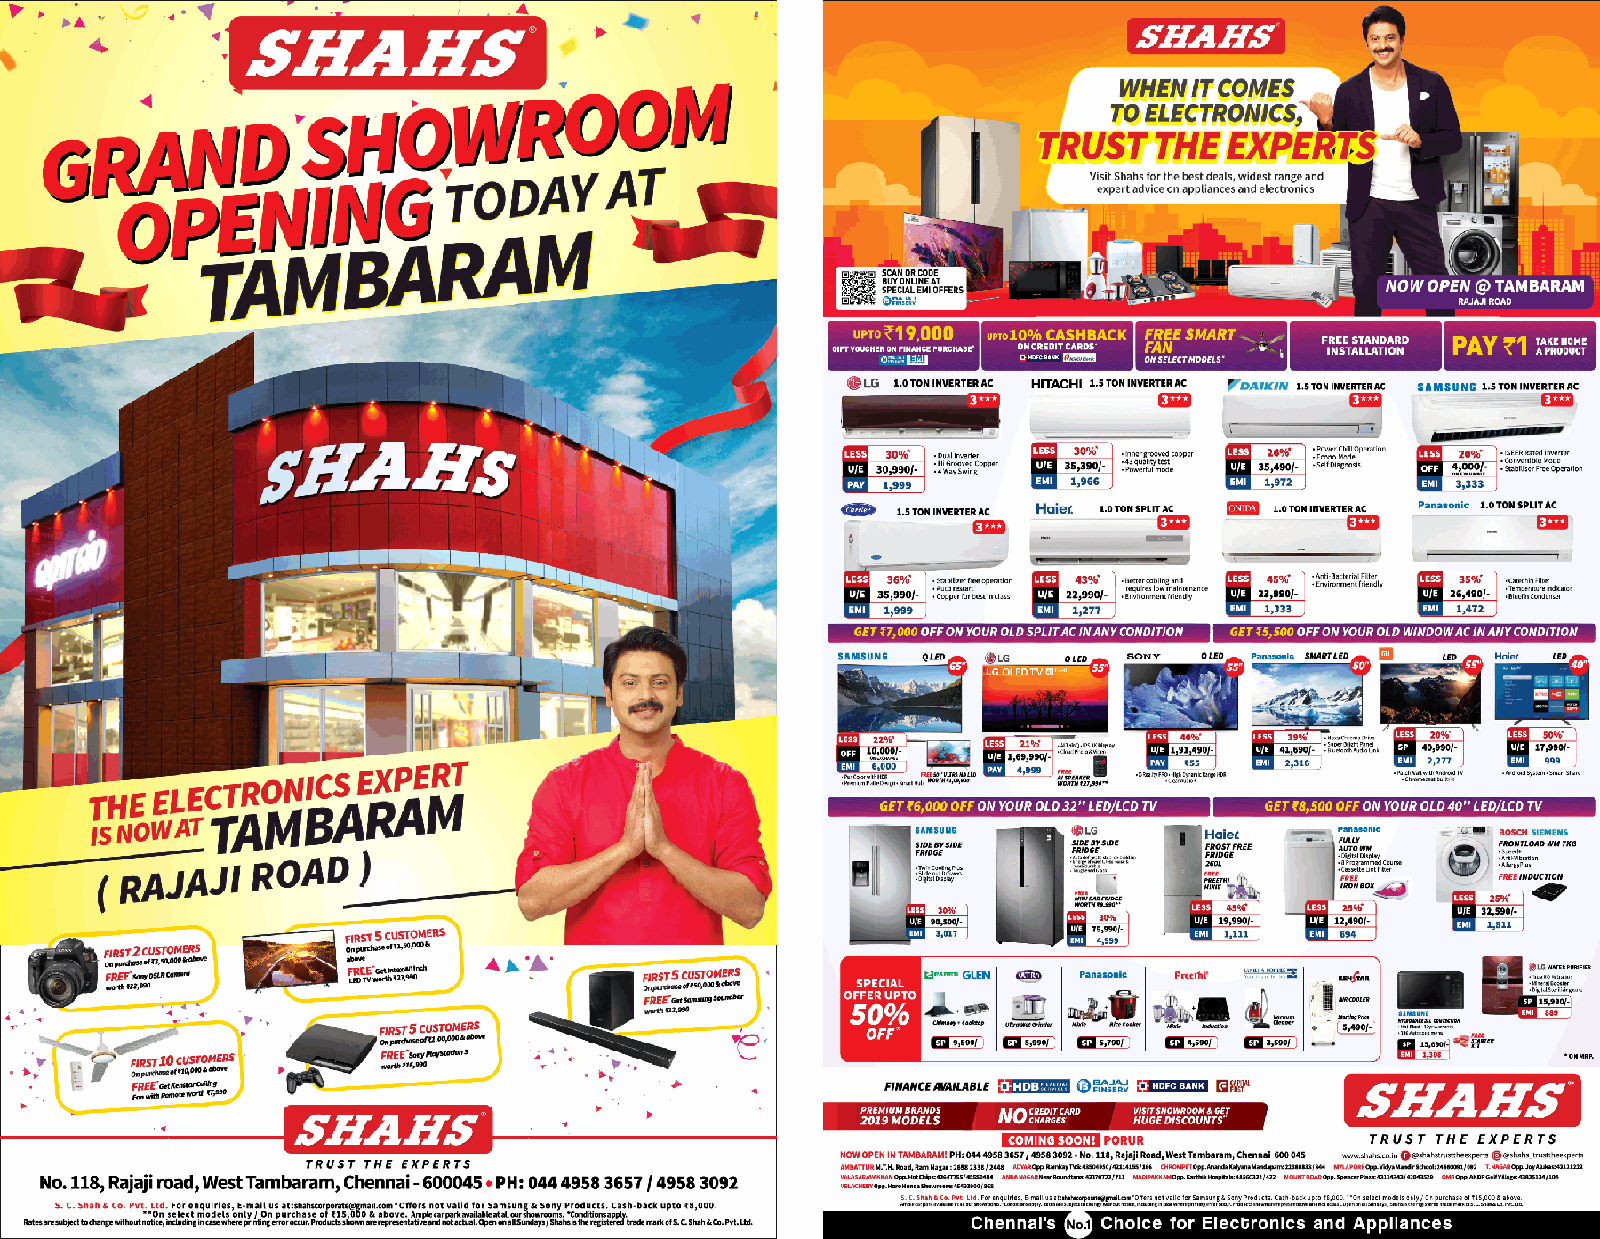 shahs-electronics-grand-showroom-opening-today-at-tambaram-ad-chennai-times-27-04-2019.png